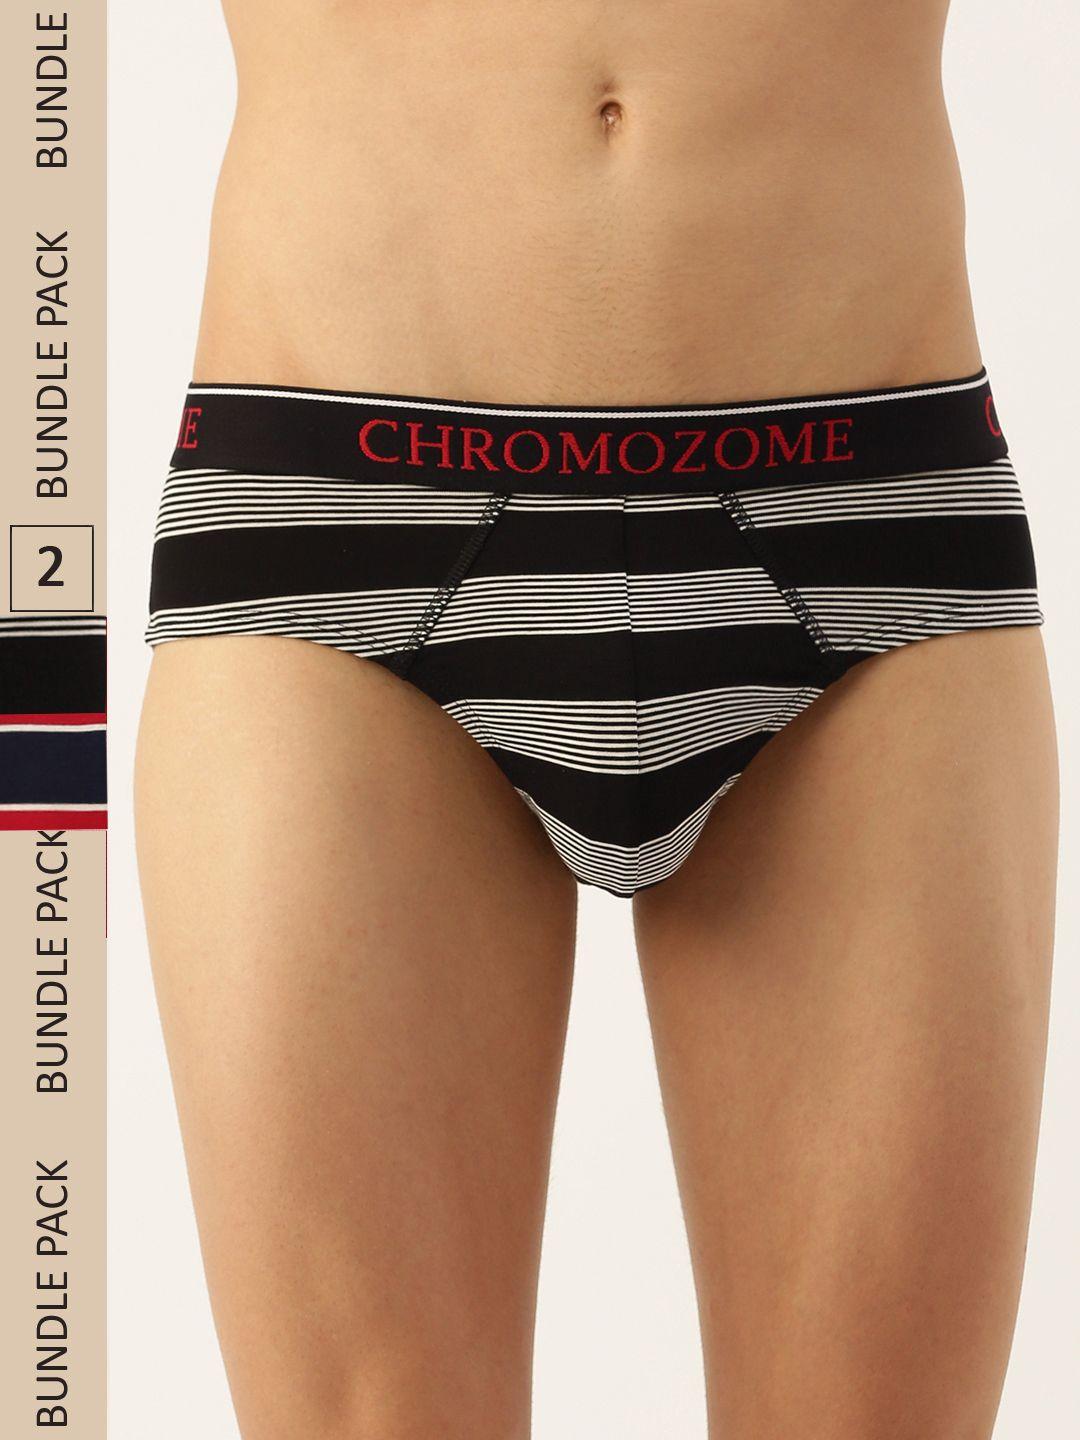 chromozome men pack of 2 ultra premium micro modal striper briefs 8902733642668